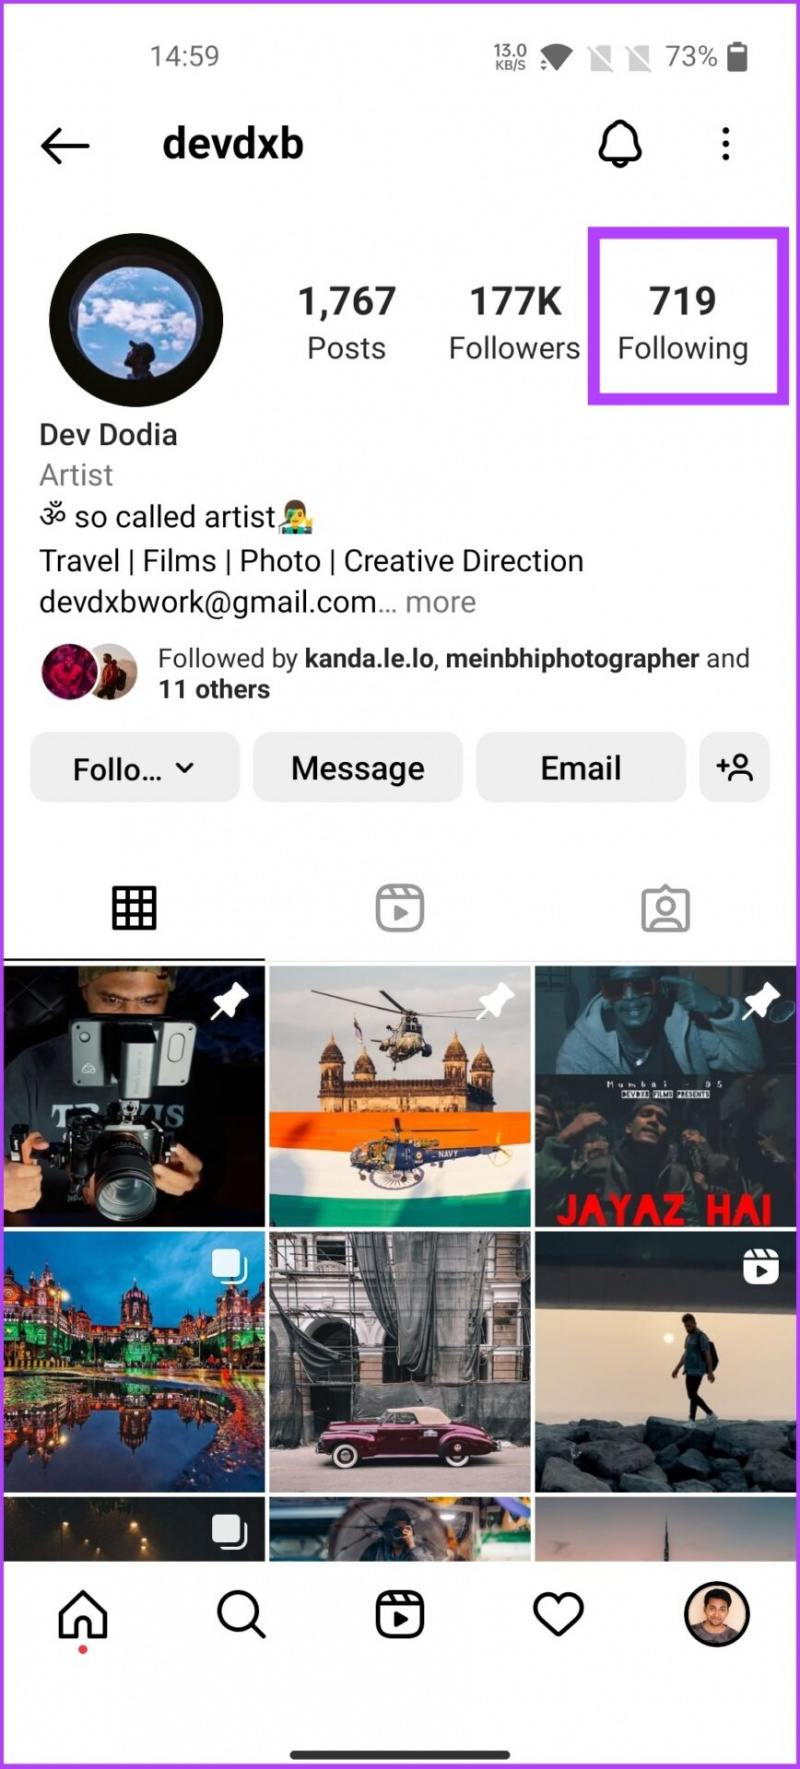   Instagram-Profil folgt